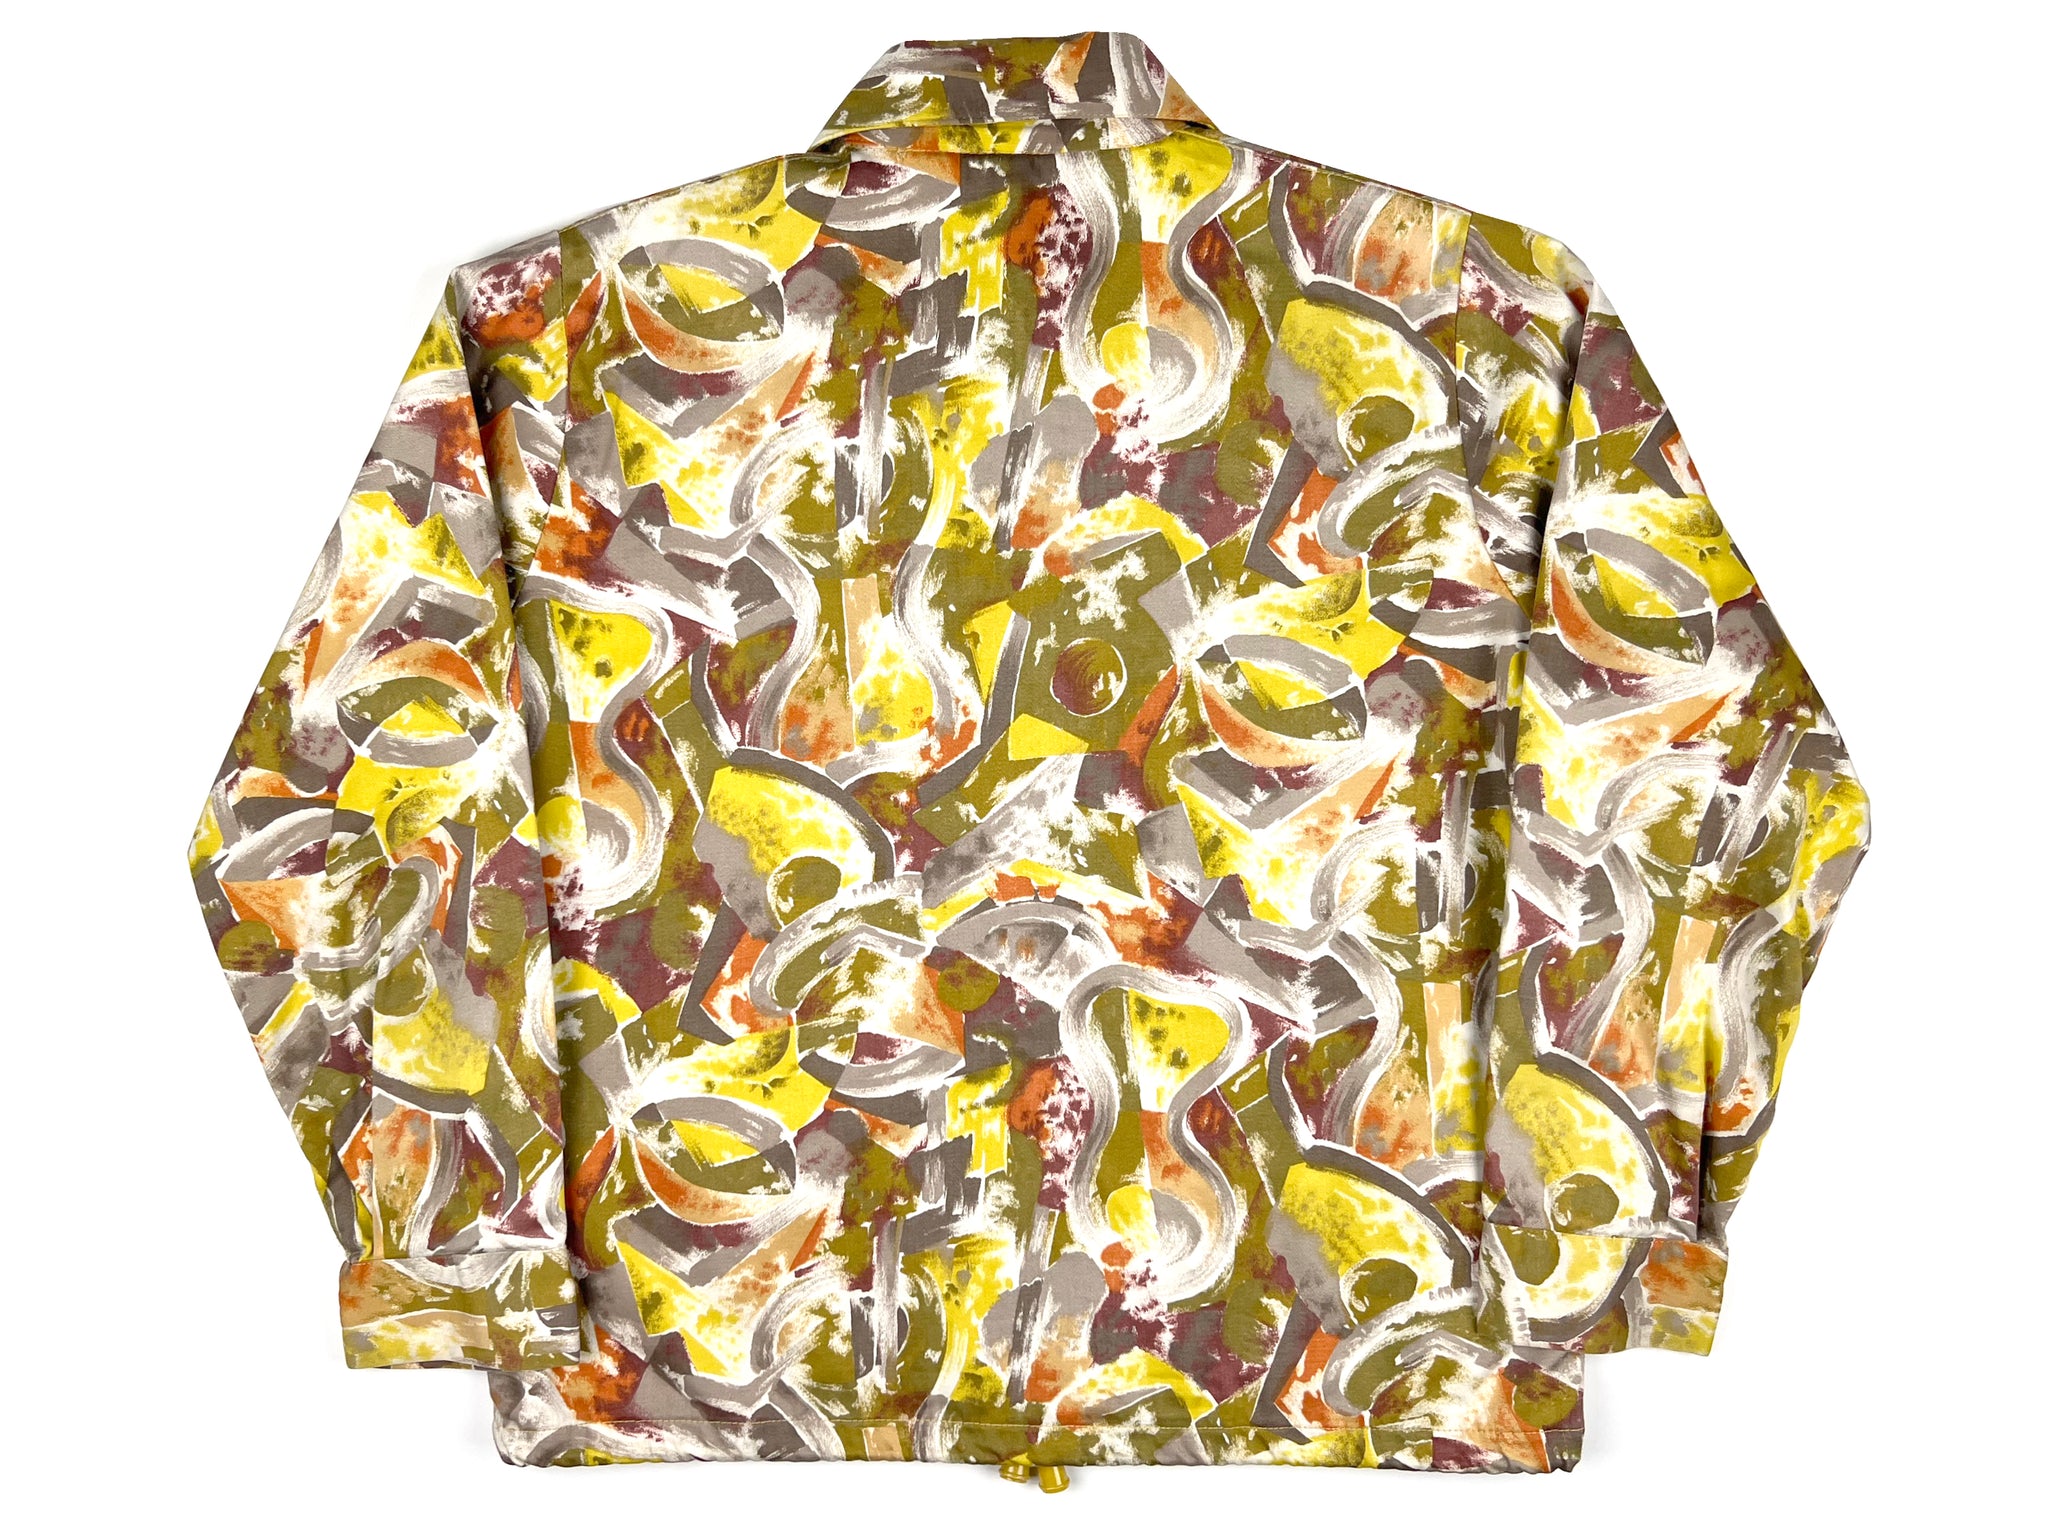 Anoraks Pattern Print Jacket